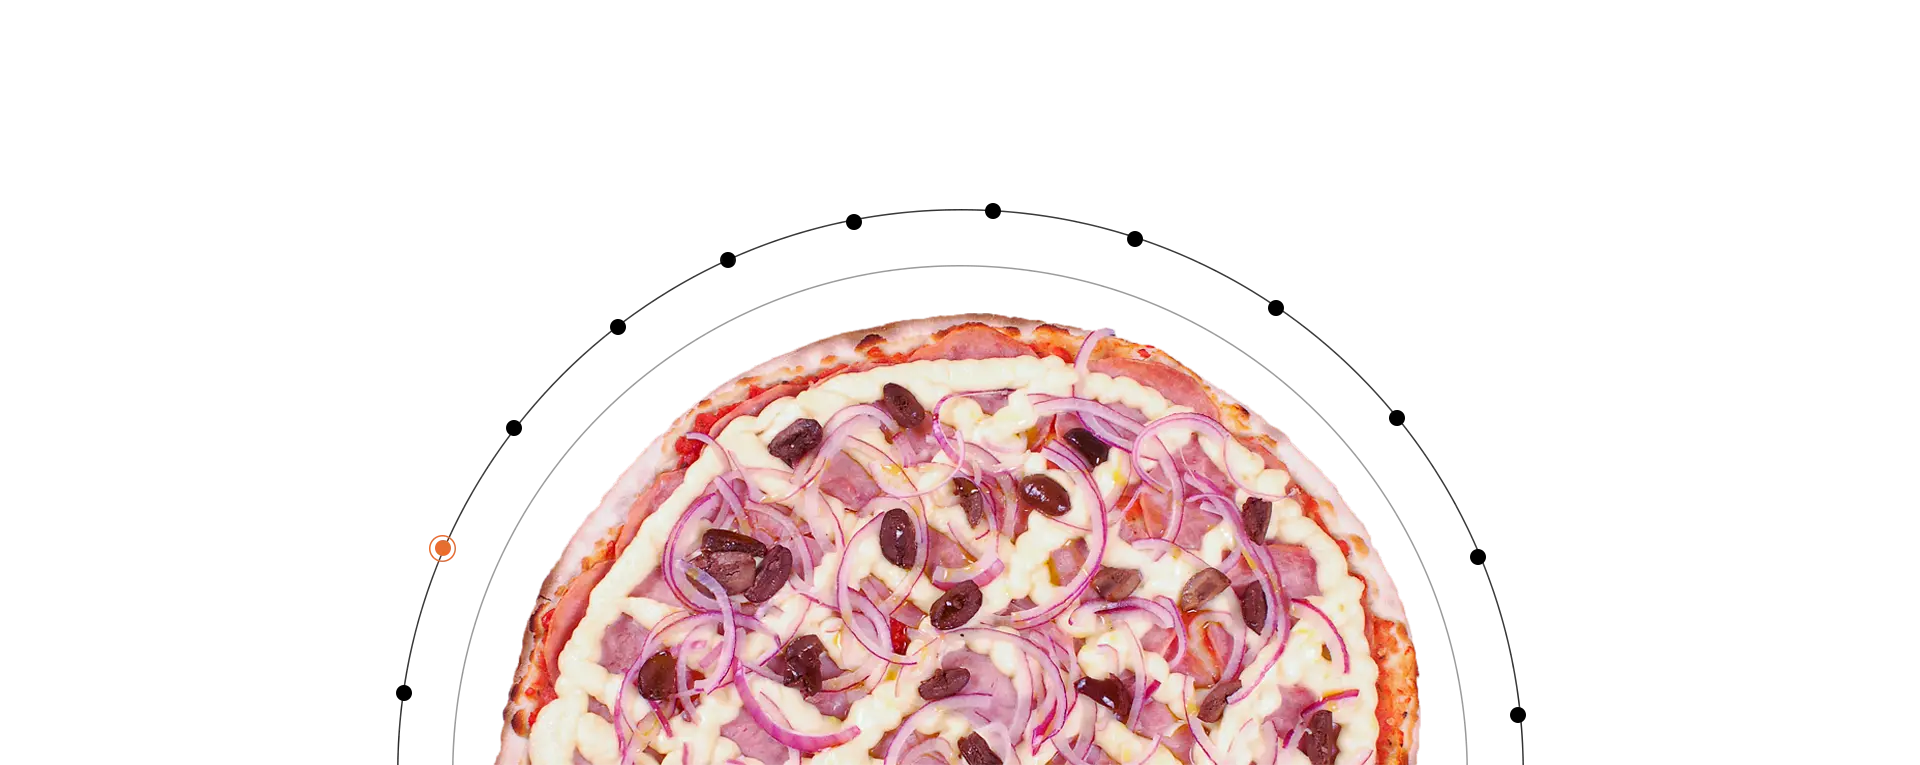 elipse_pizza-loregia.webp